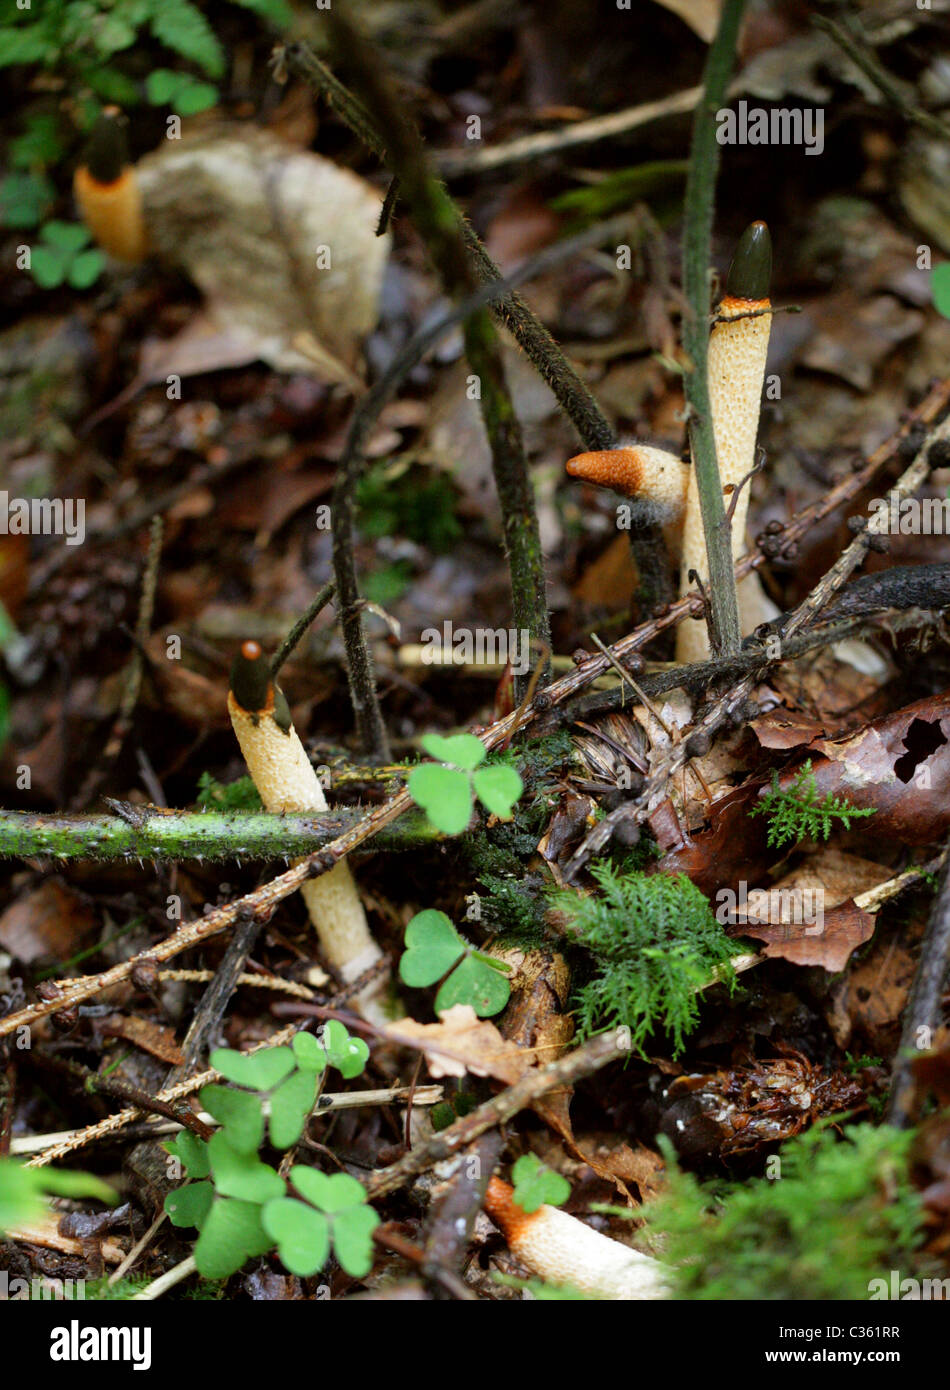 Dog Stinkhorn, Mutinus caninus, Phallaceae. Growing in Woodland Undergrowth. Stock Photo